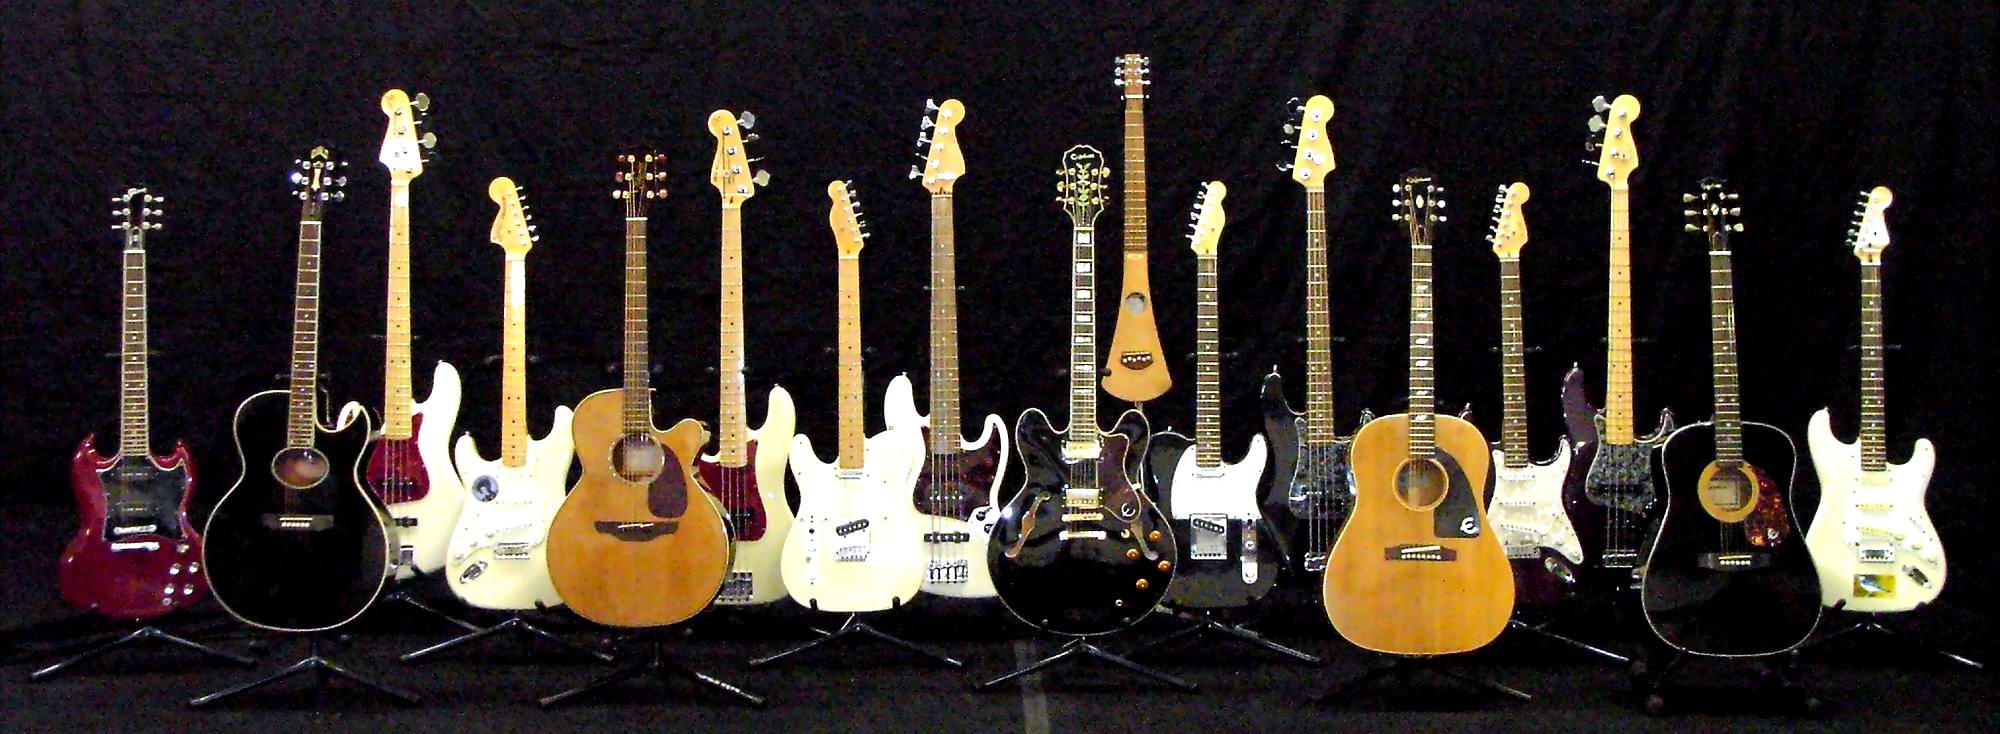 Intellasound / Guitars 08 